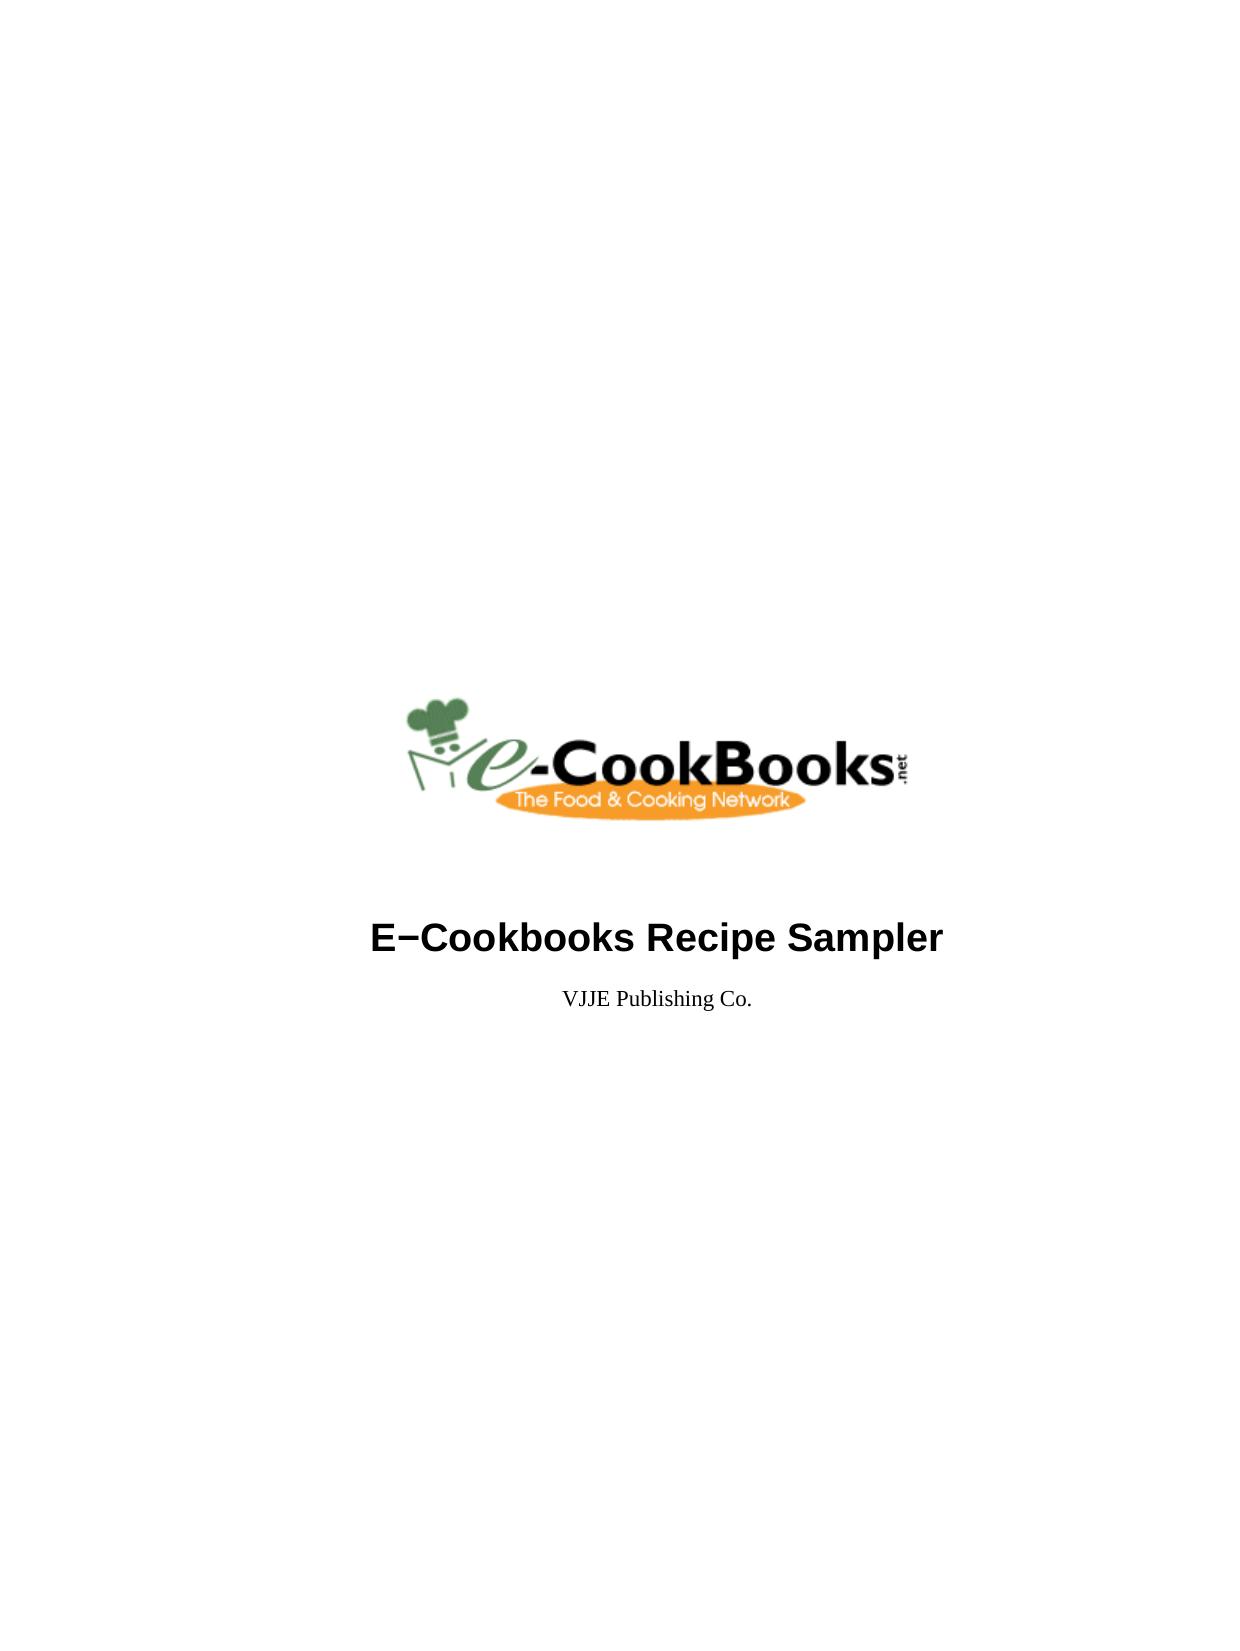 E-Cookbooks Recipe Sampler by Cookbooks